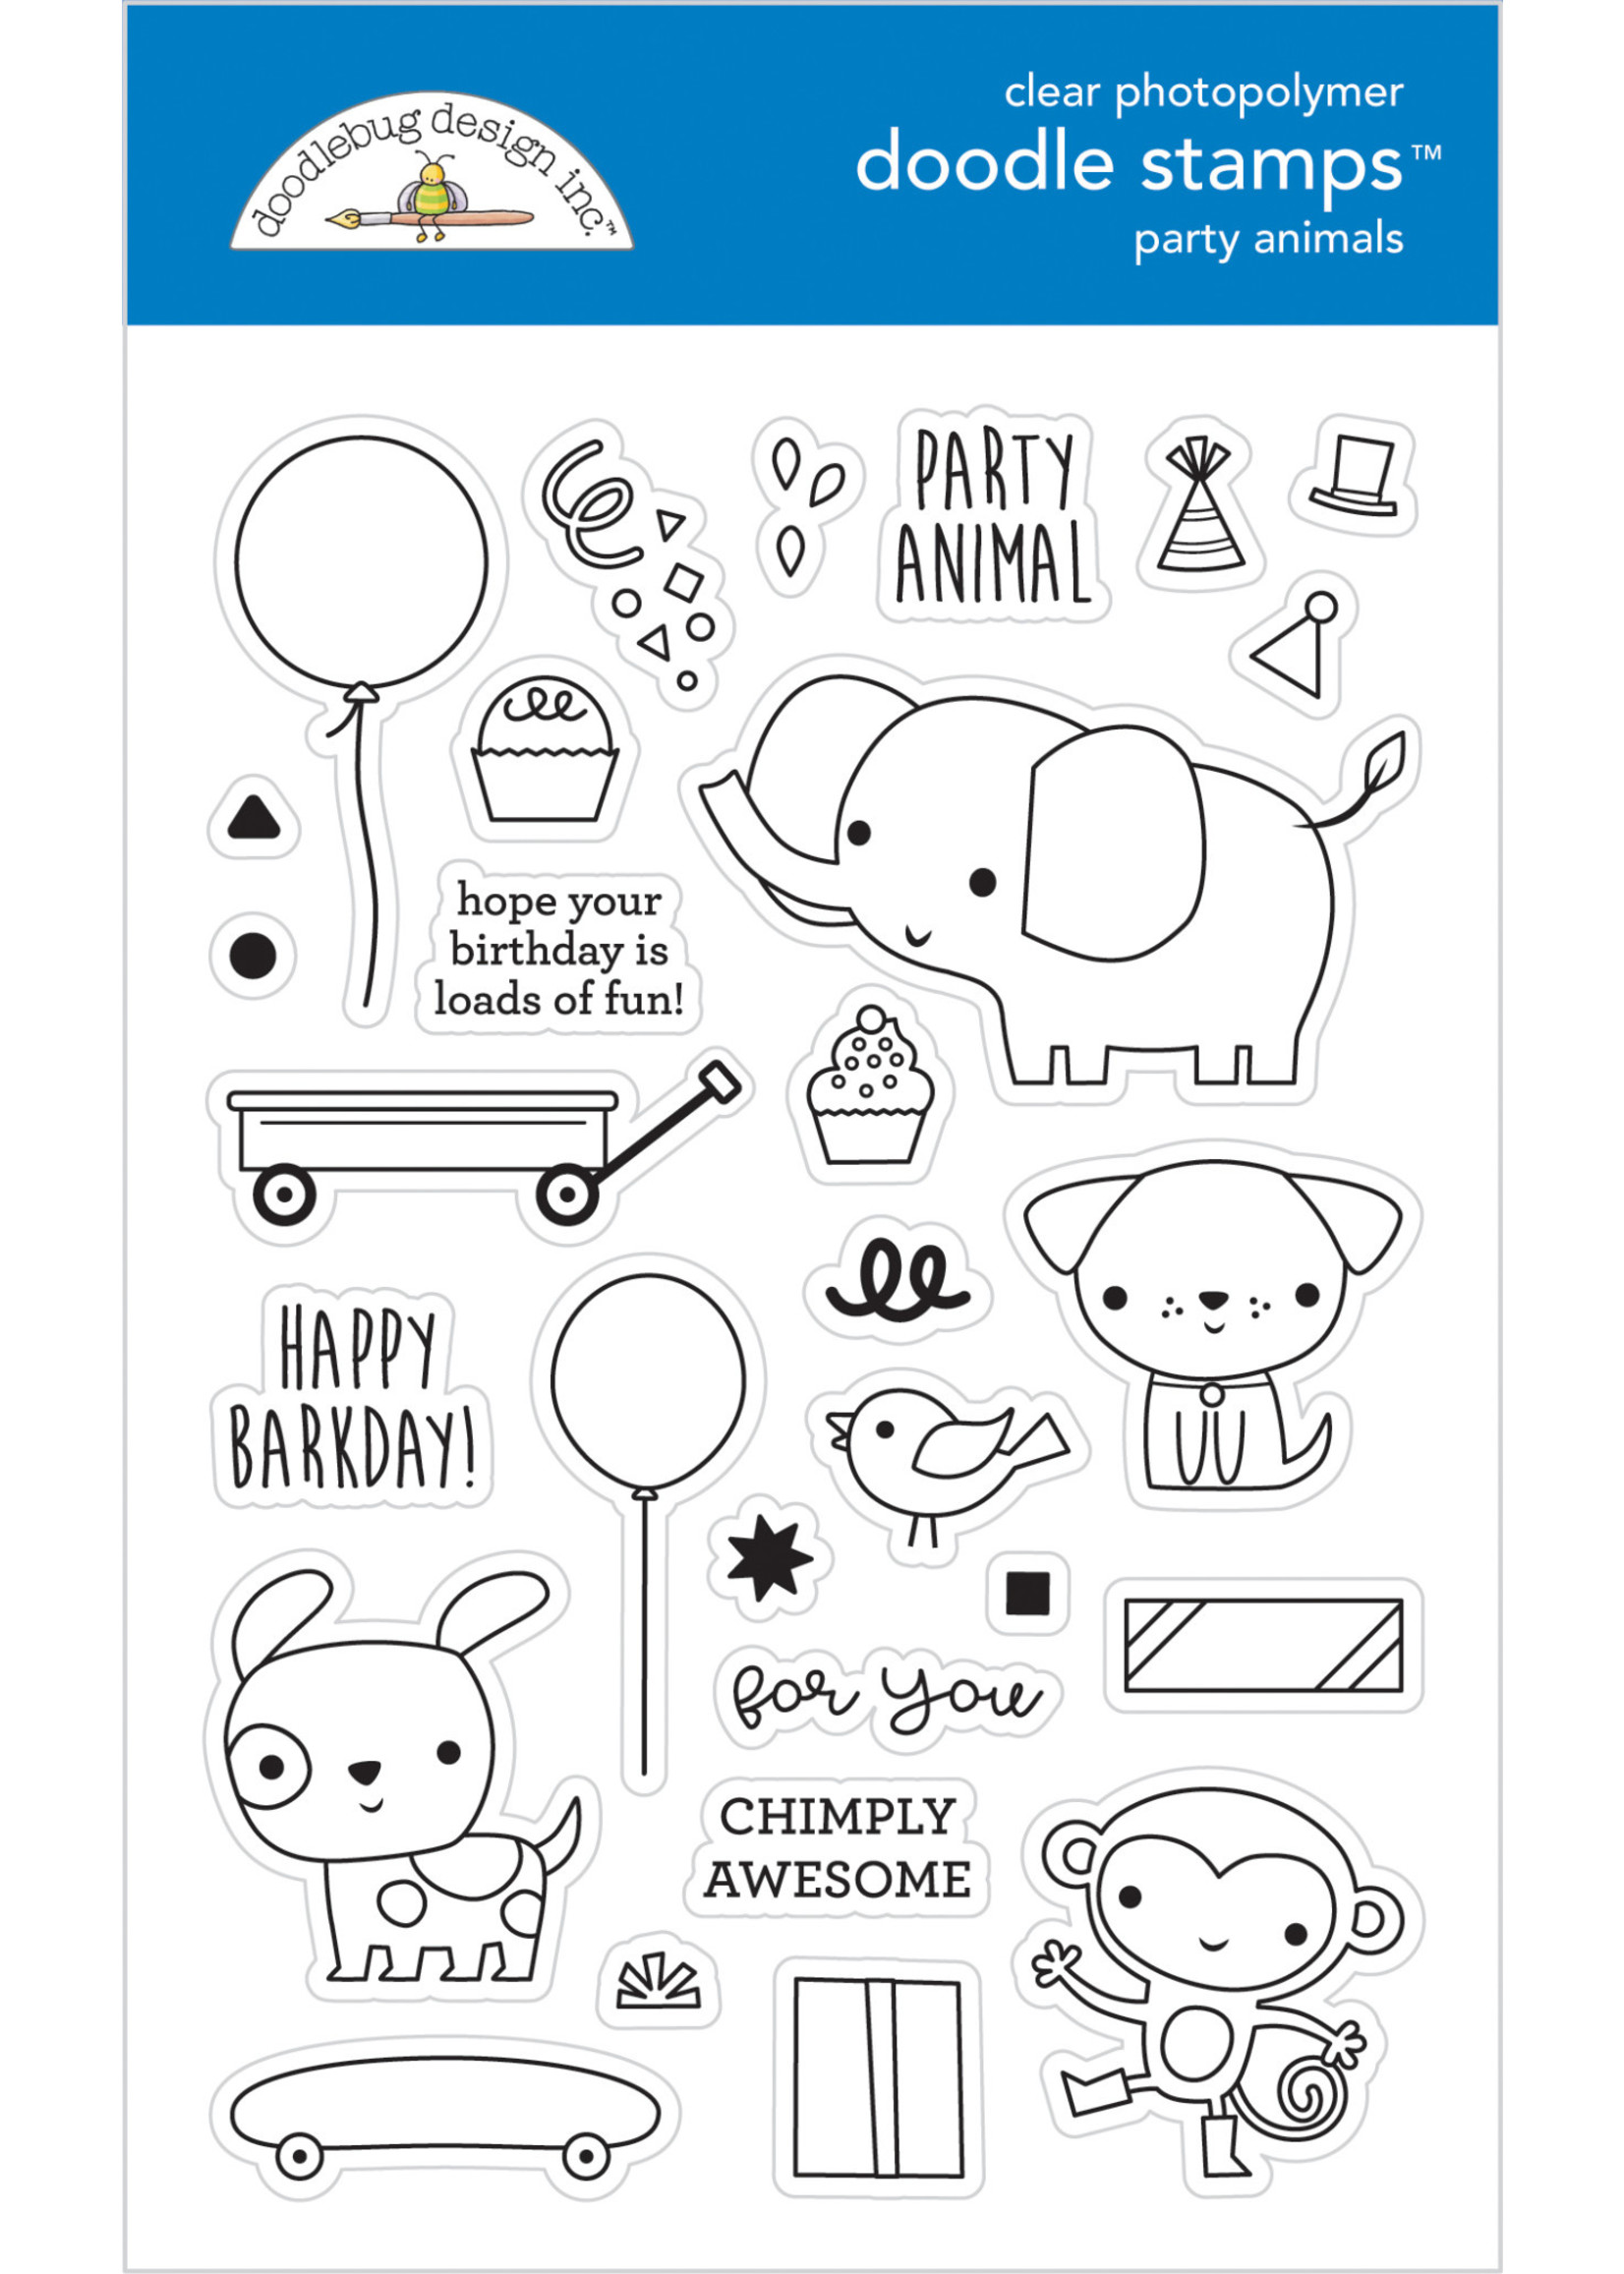 DOODLEBUG Doodlebug party time party animals - boy doodle stamps